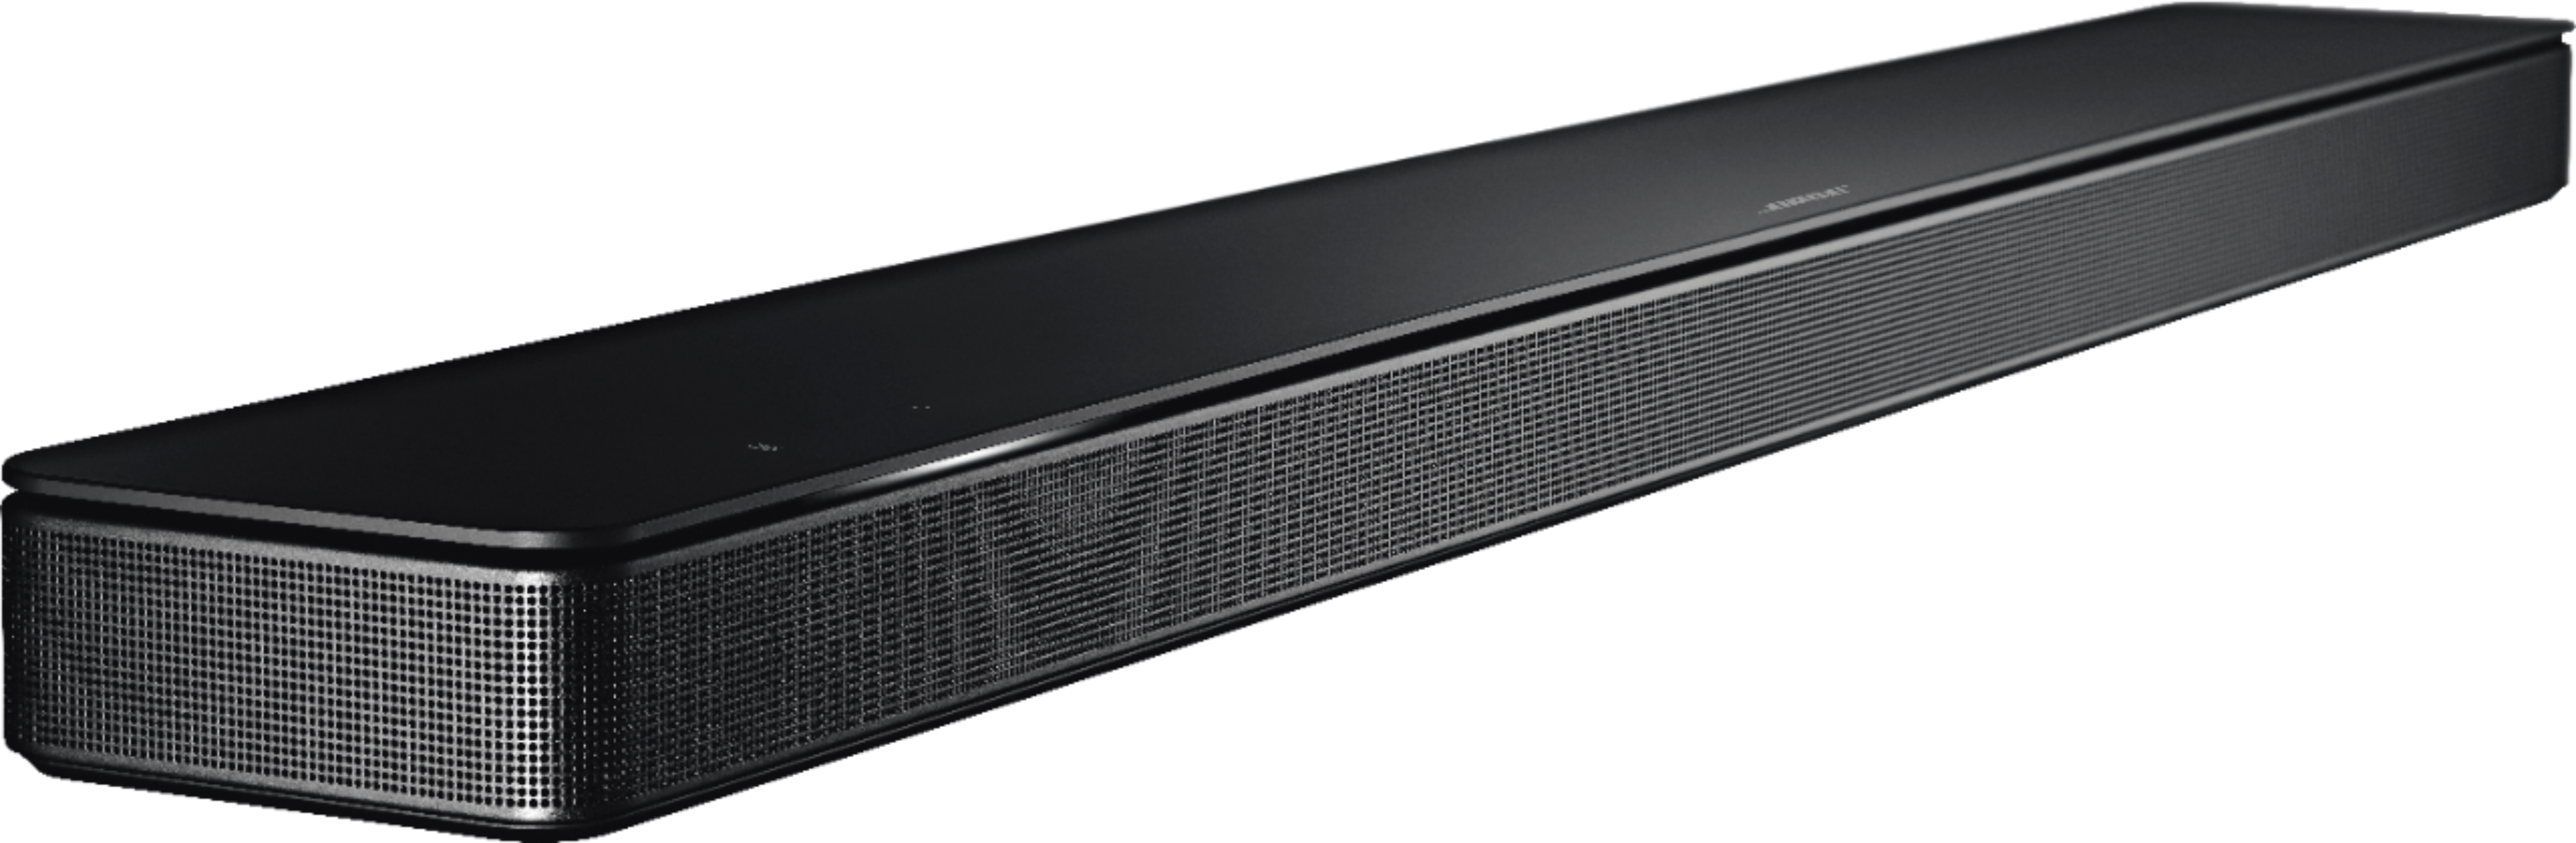 Best Buy: Bose Soundbar 500 Smart Speaker with Amazon Alexa and 